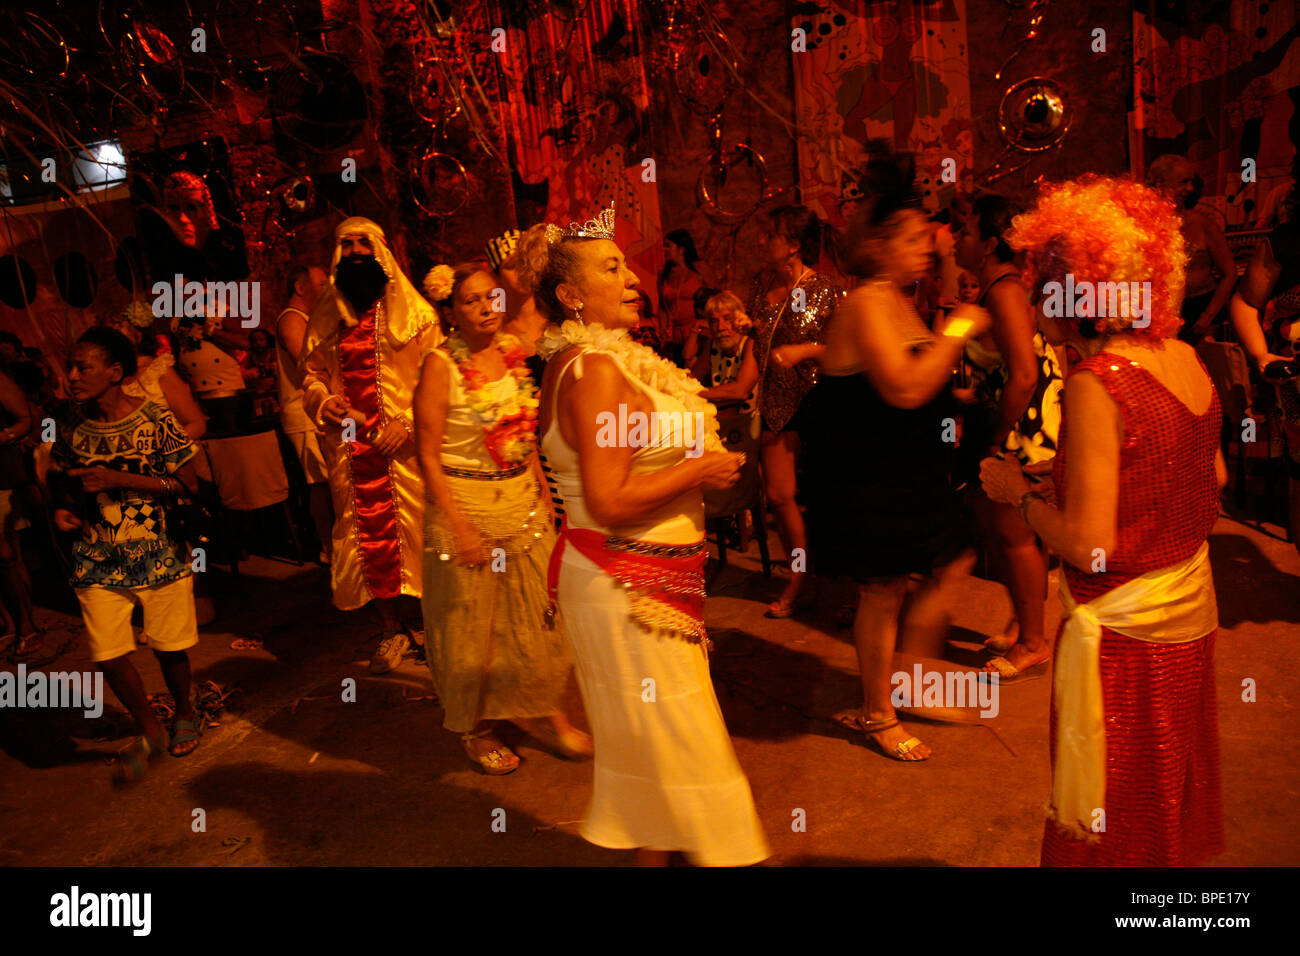 Carnival ball at a samba club in Lapa, Rio de Janeiro, Brazil. Stock Photo